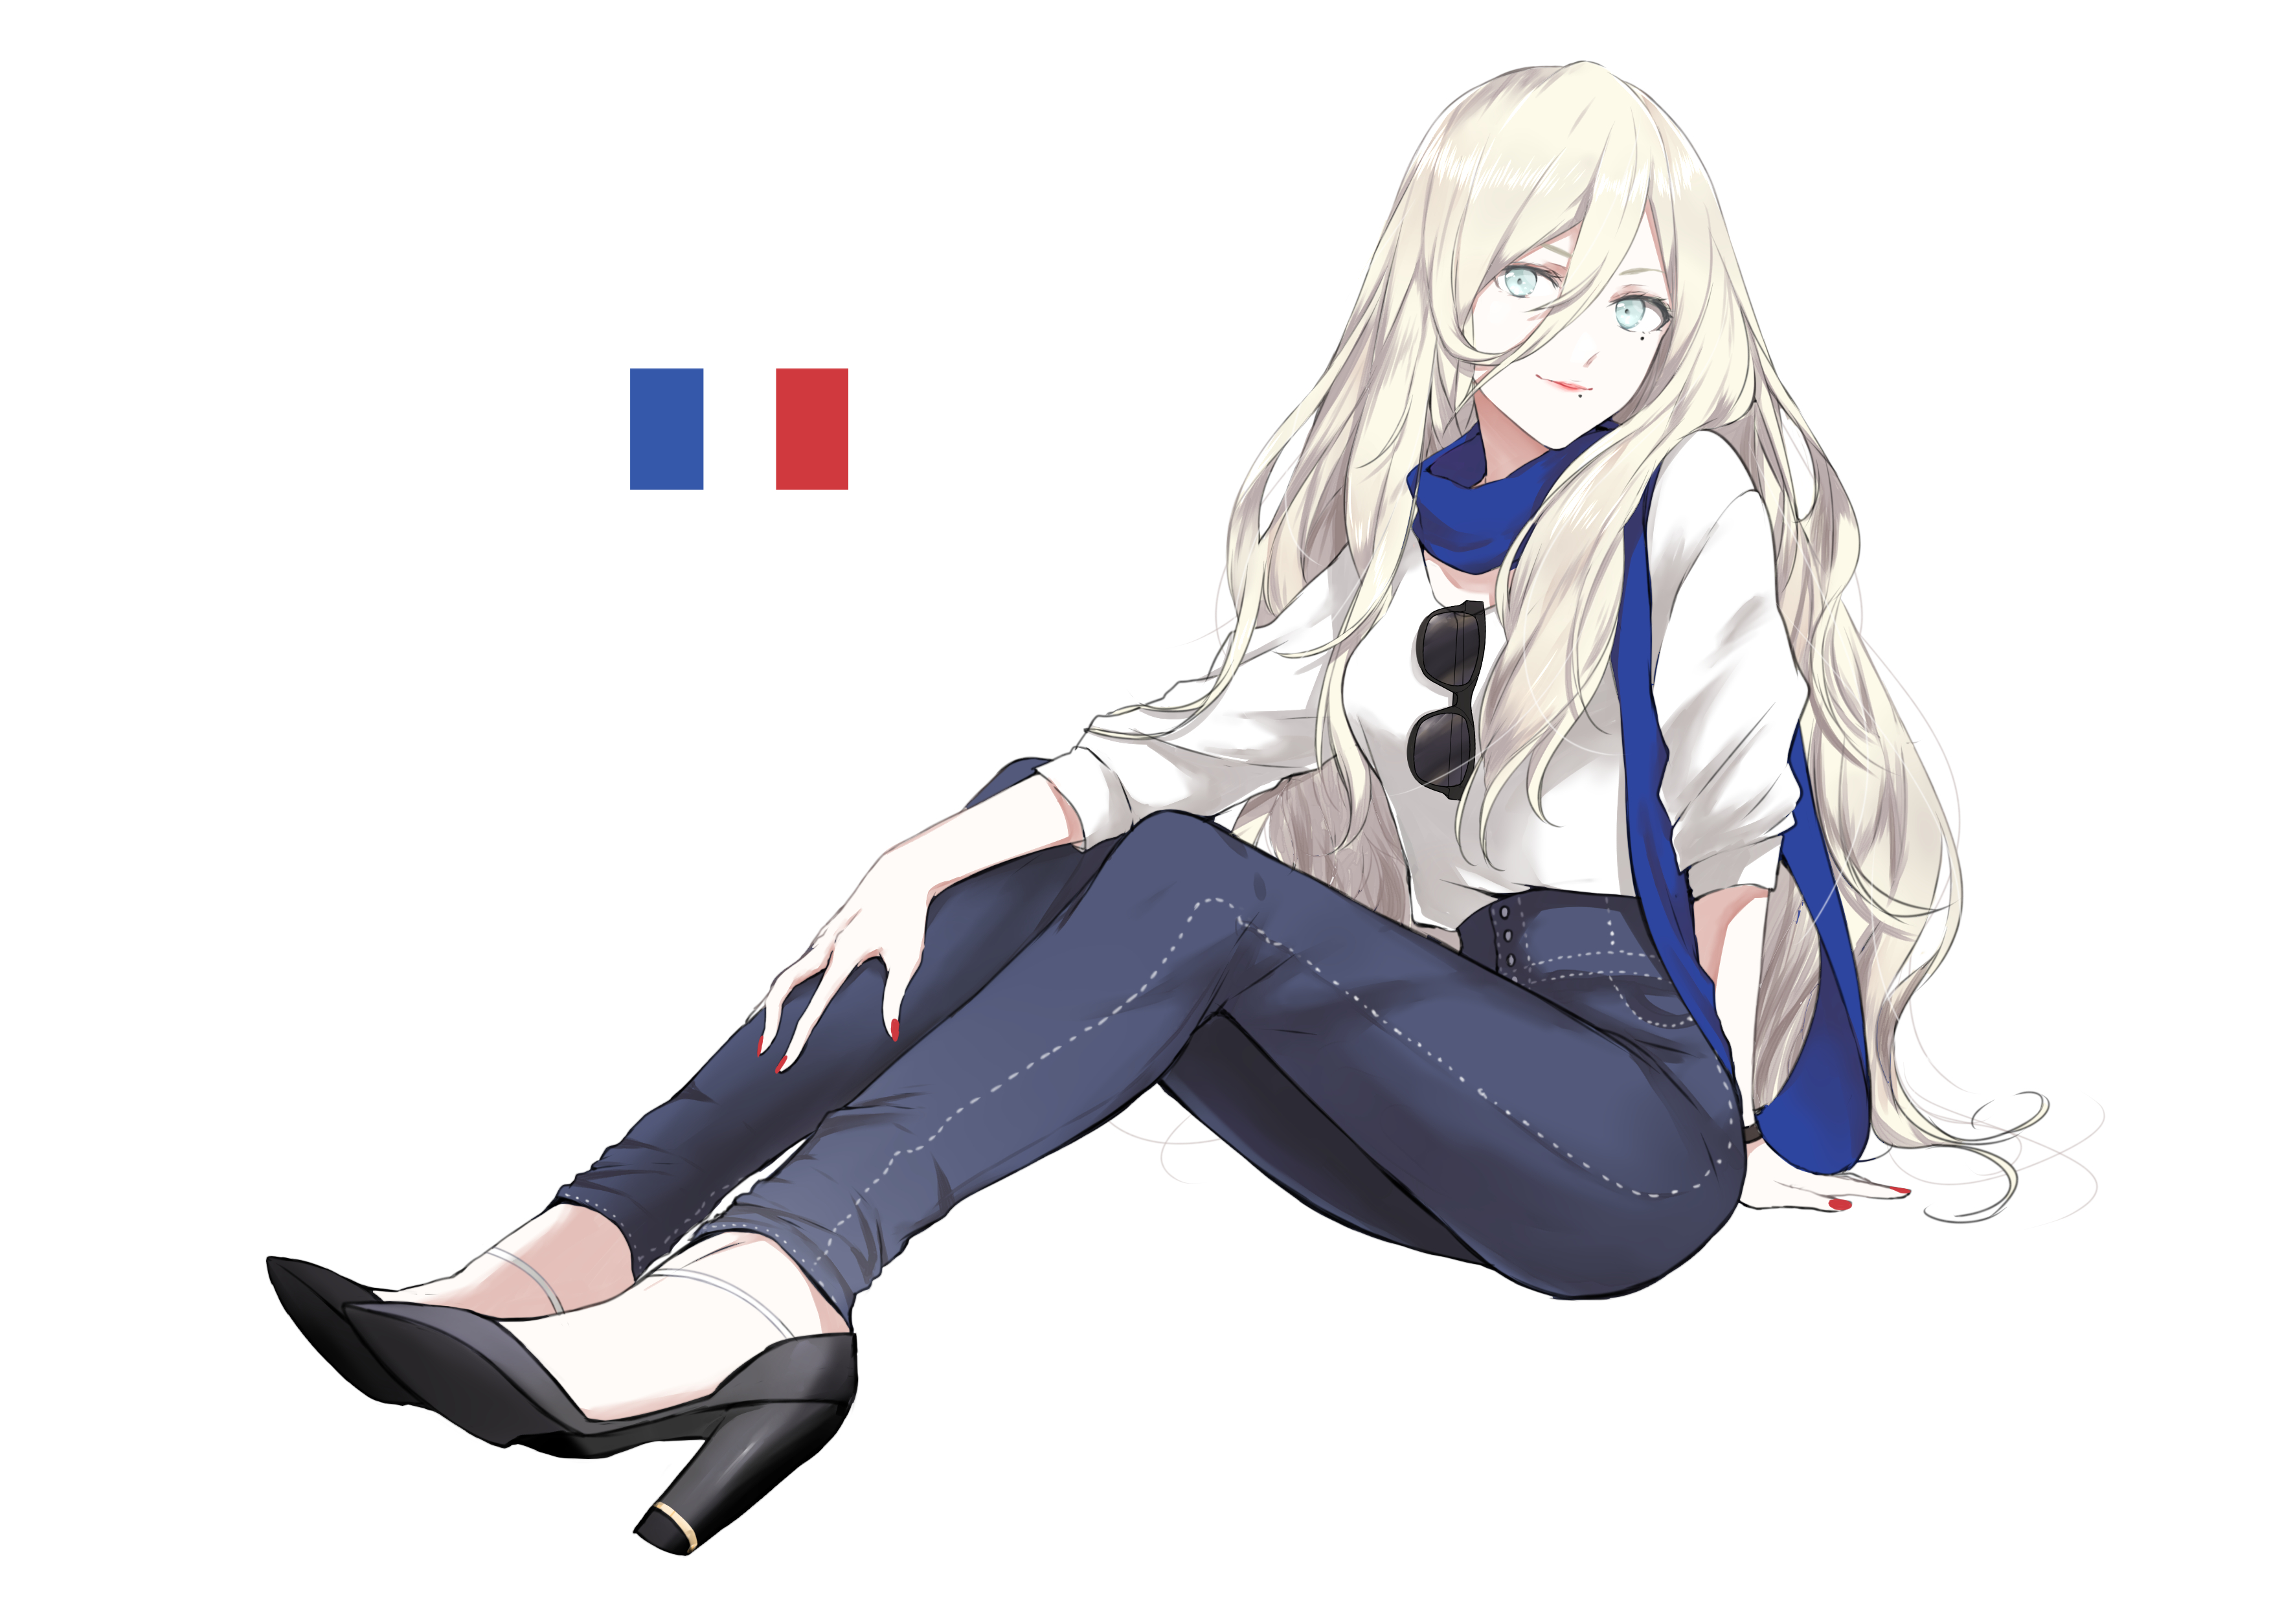 Anime 3541x2508 anime anime girls legs blonde long hair simple background France